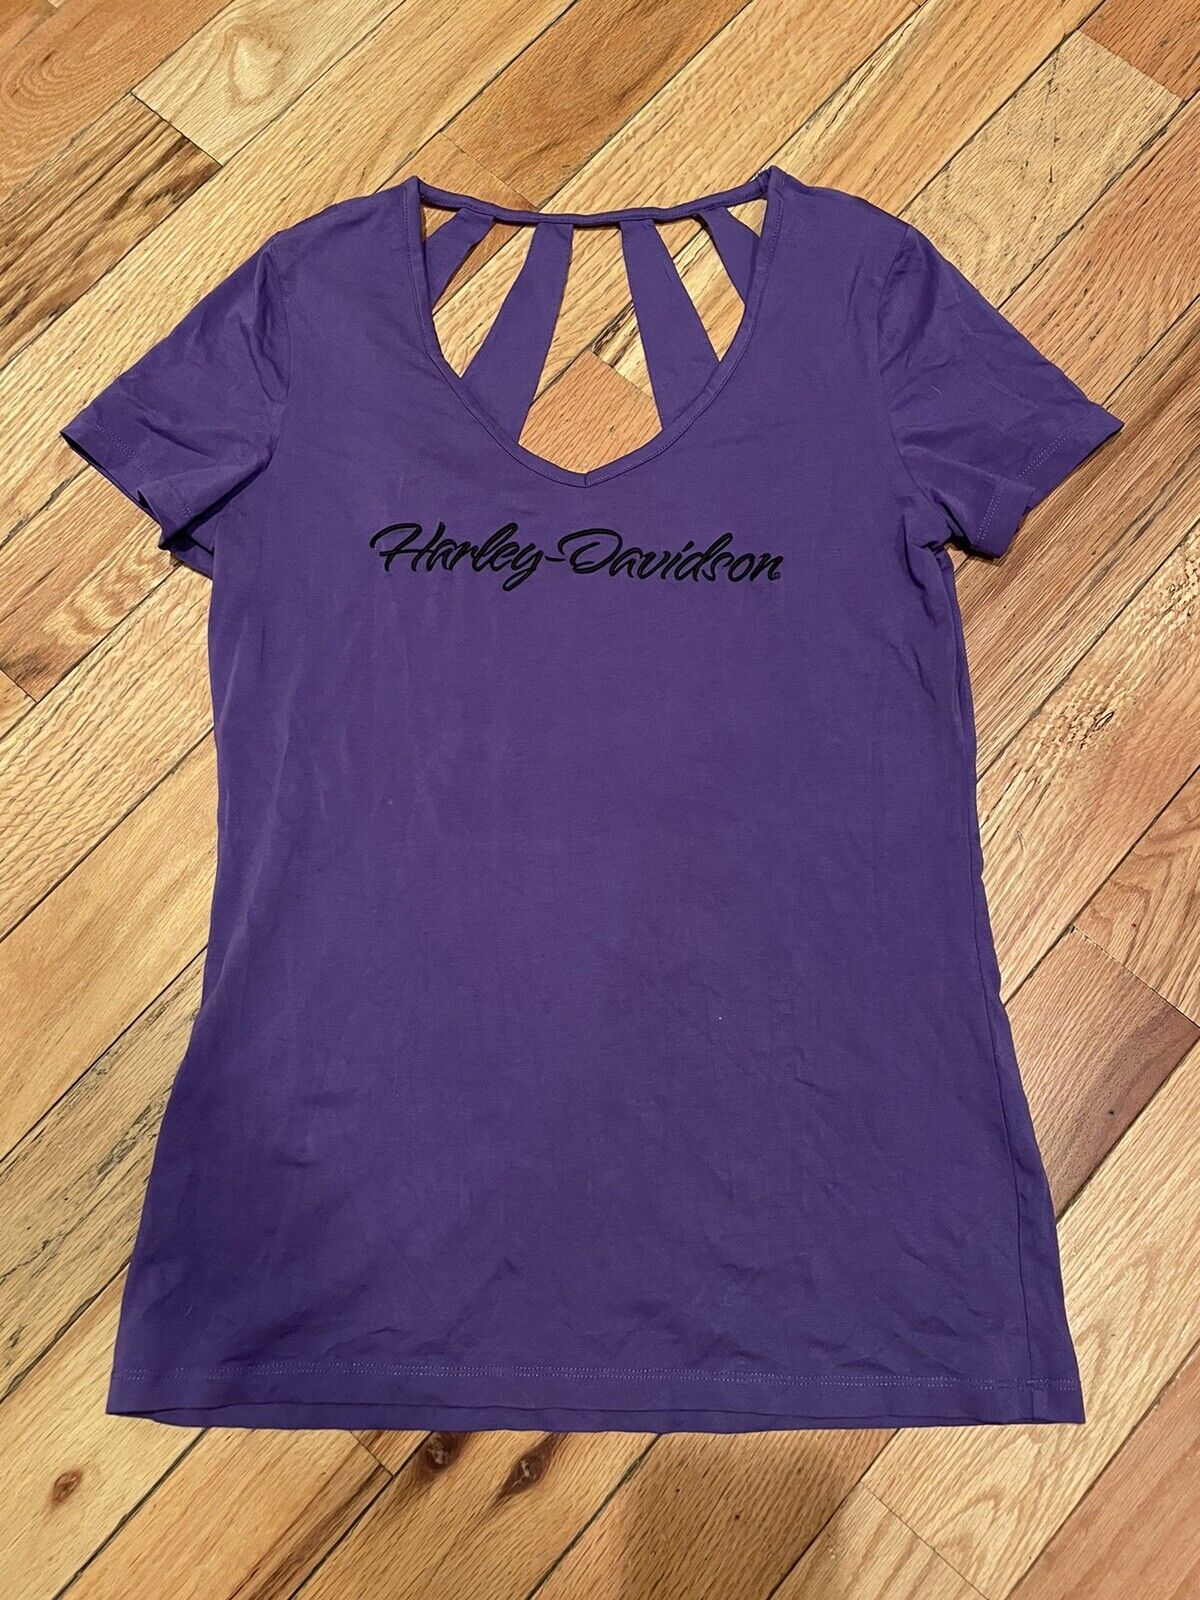 Harley Davidson Women’s Purple Cut Out T-Shirt Size Large El Paso Texas